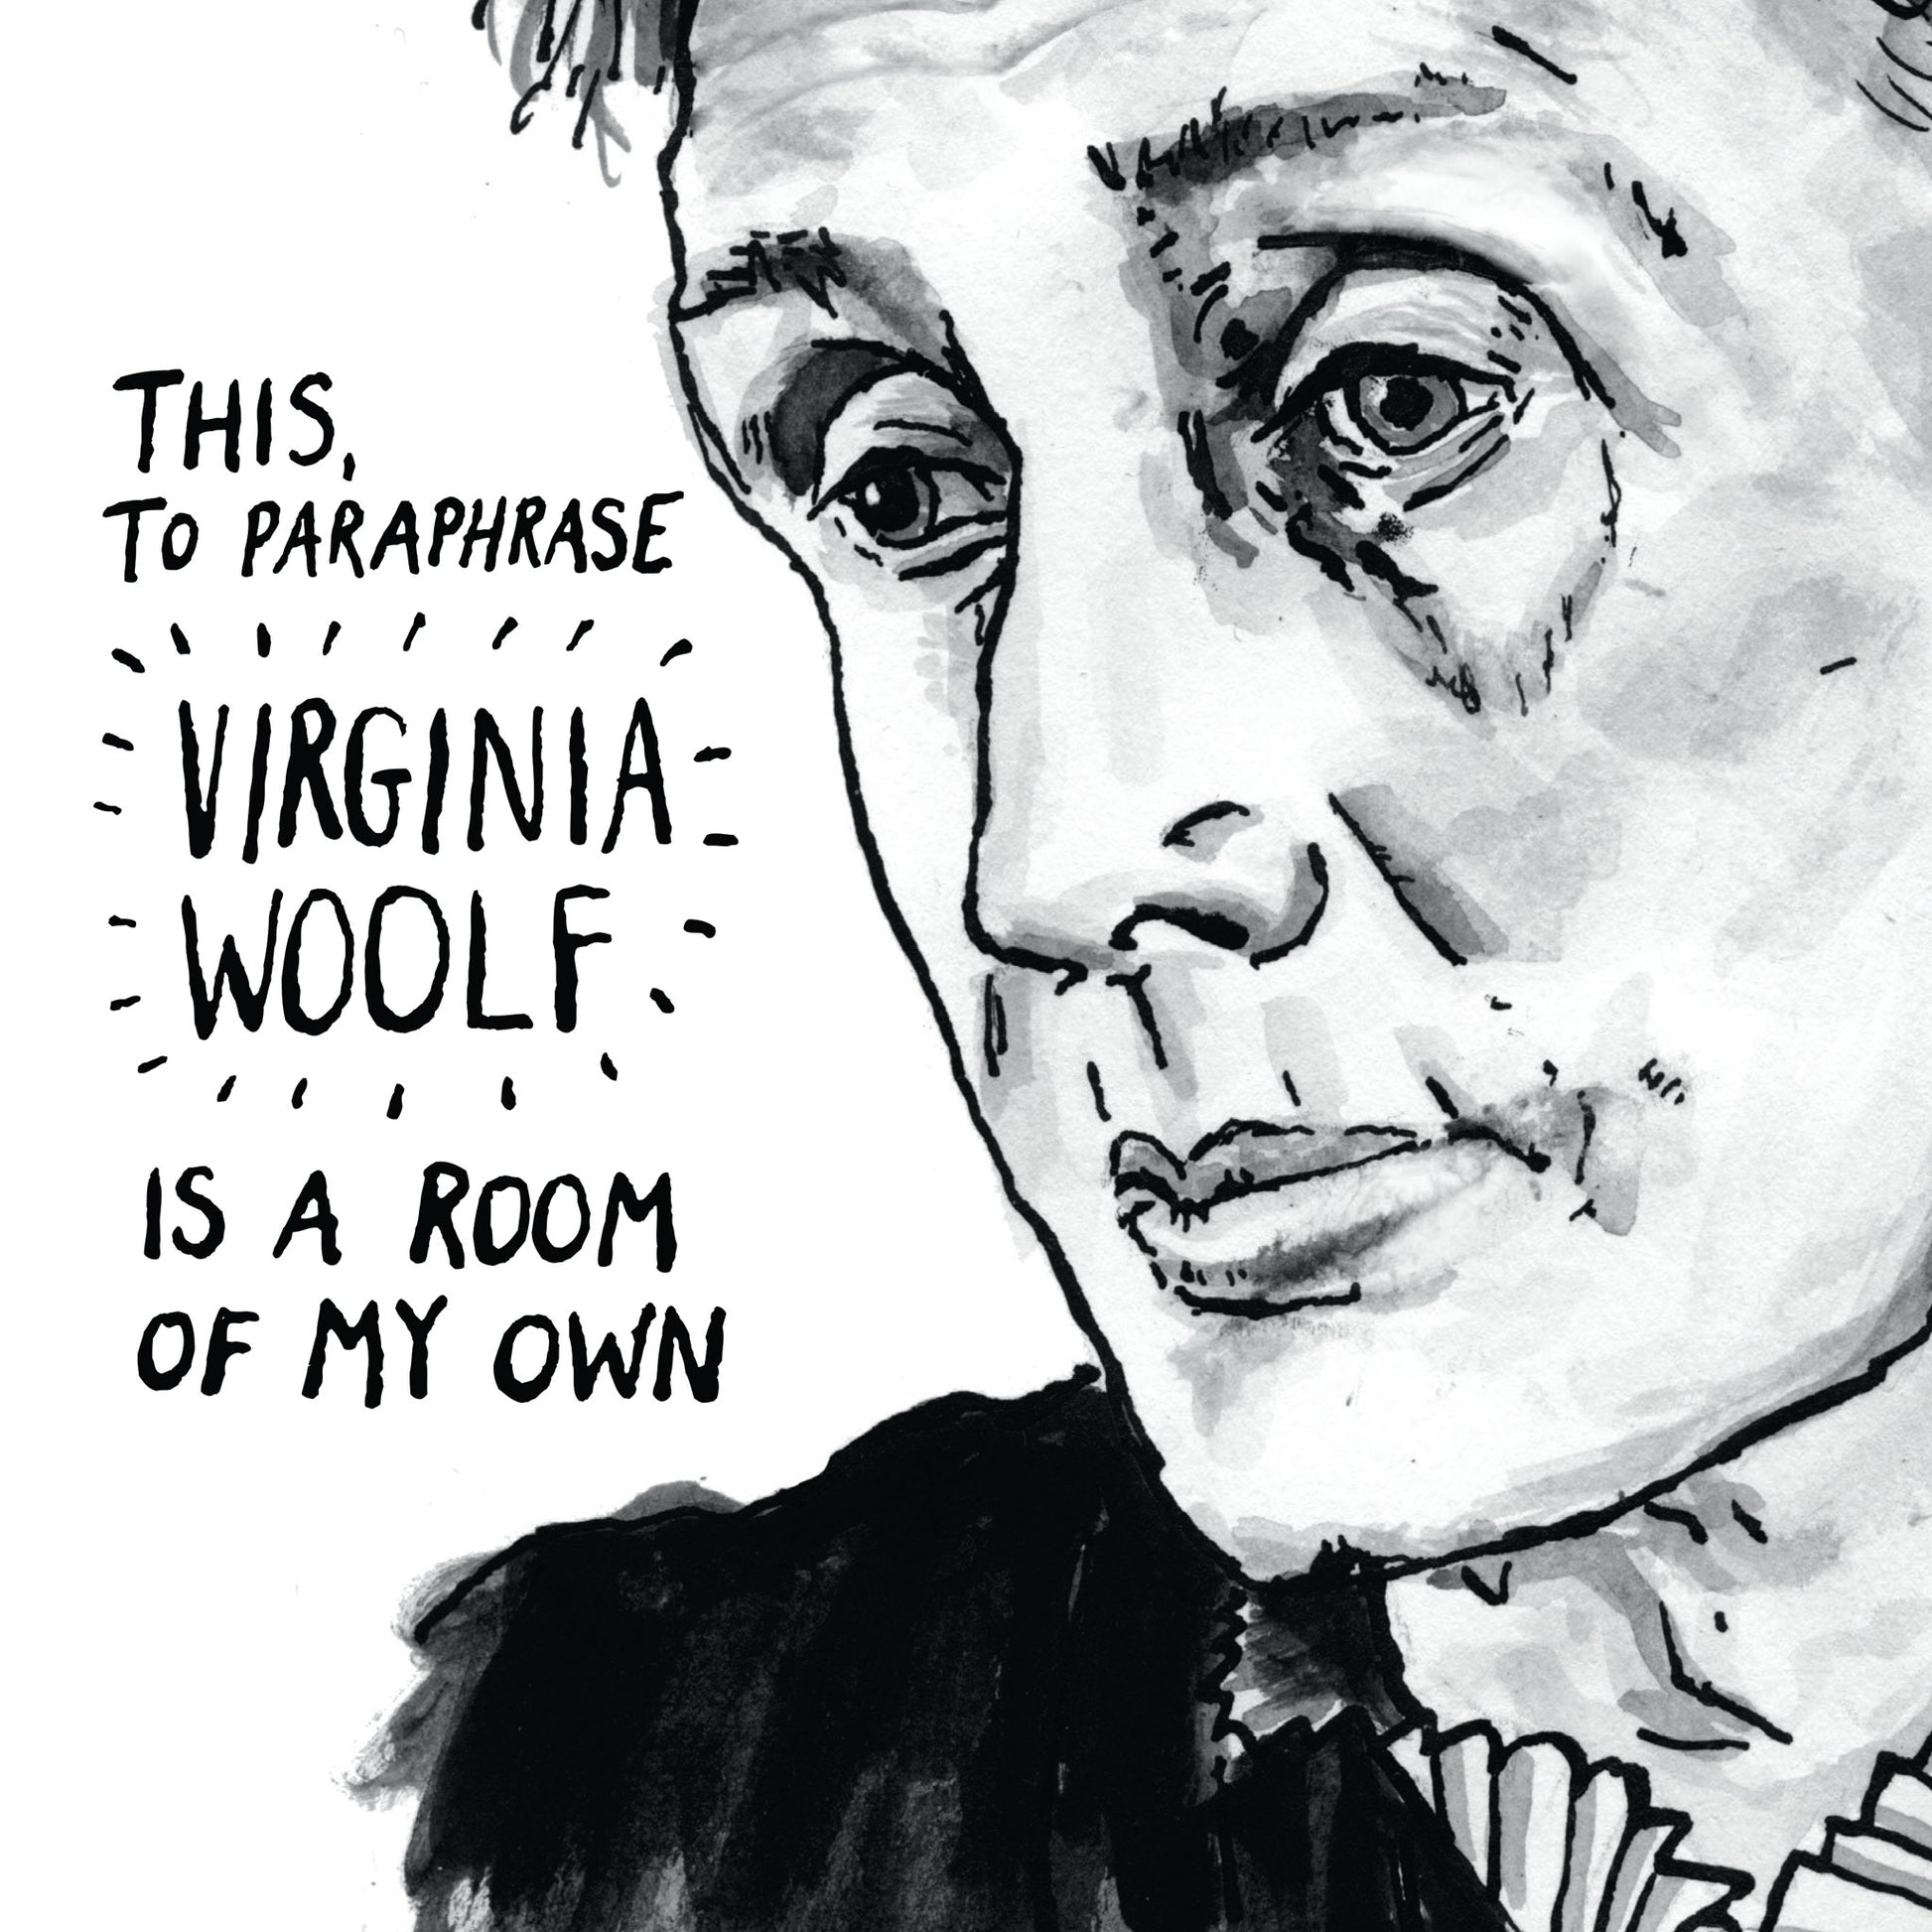 Virginia Woolf Portrait Poster Print